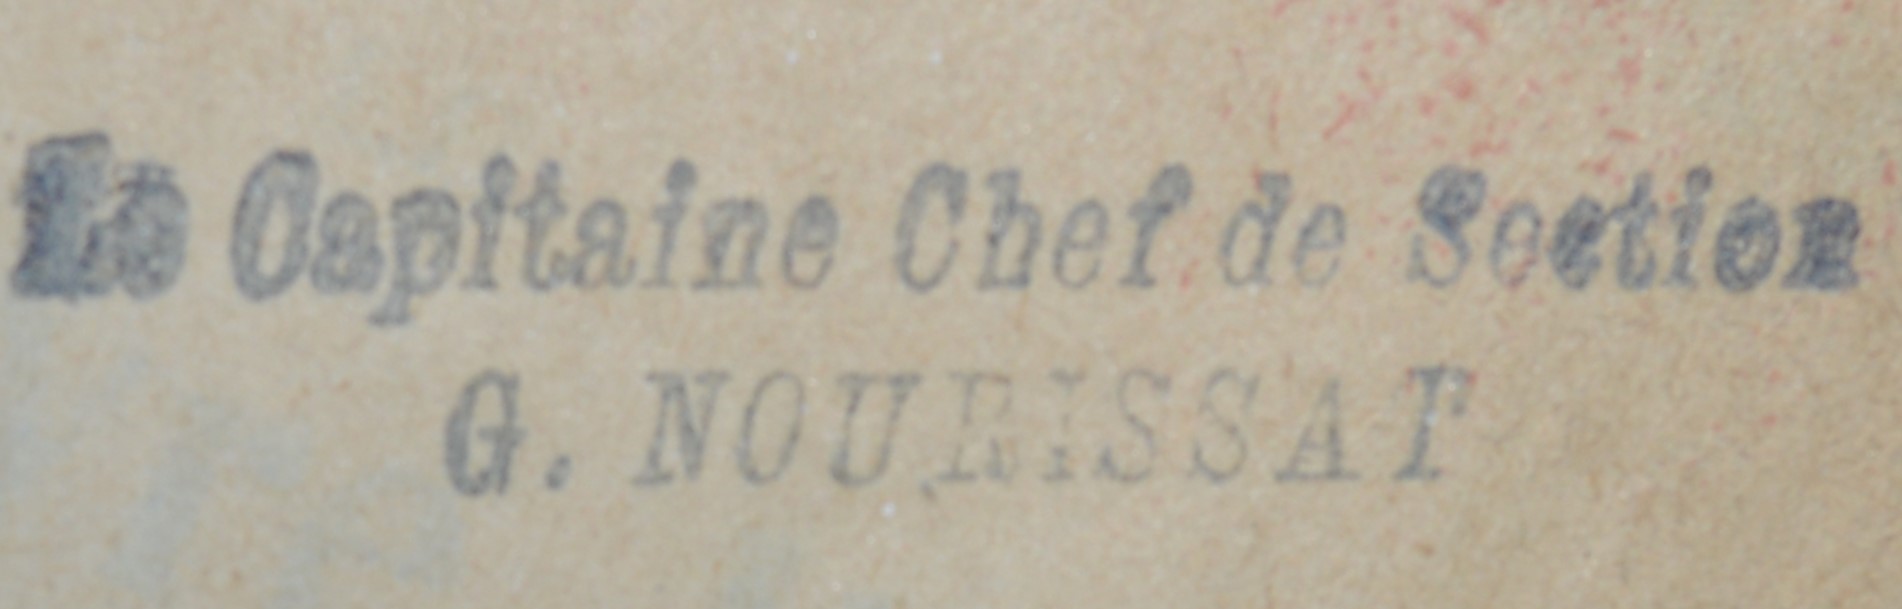 objet personnel - petit livre illustré du fantassin - 1915 (2).JPG